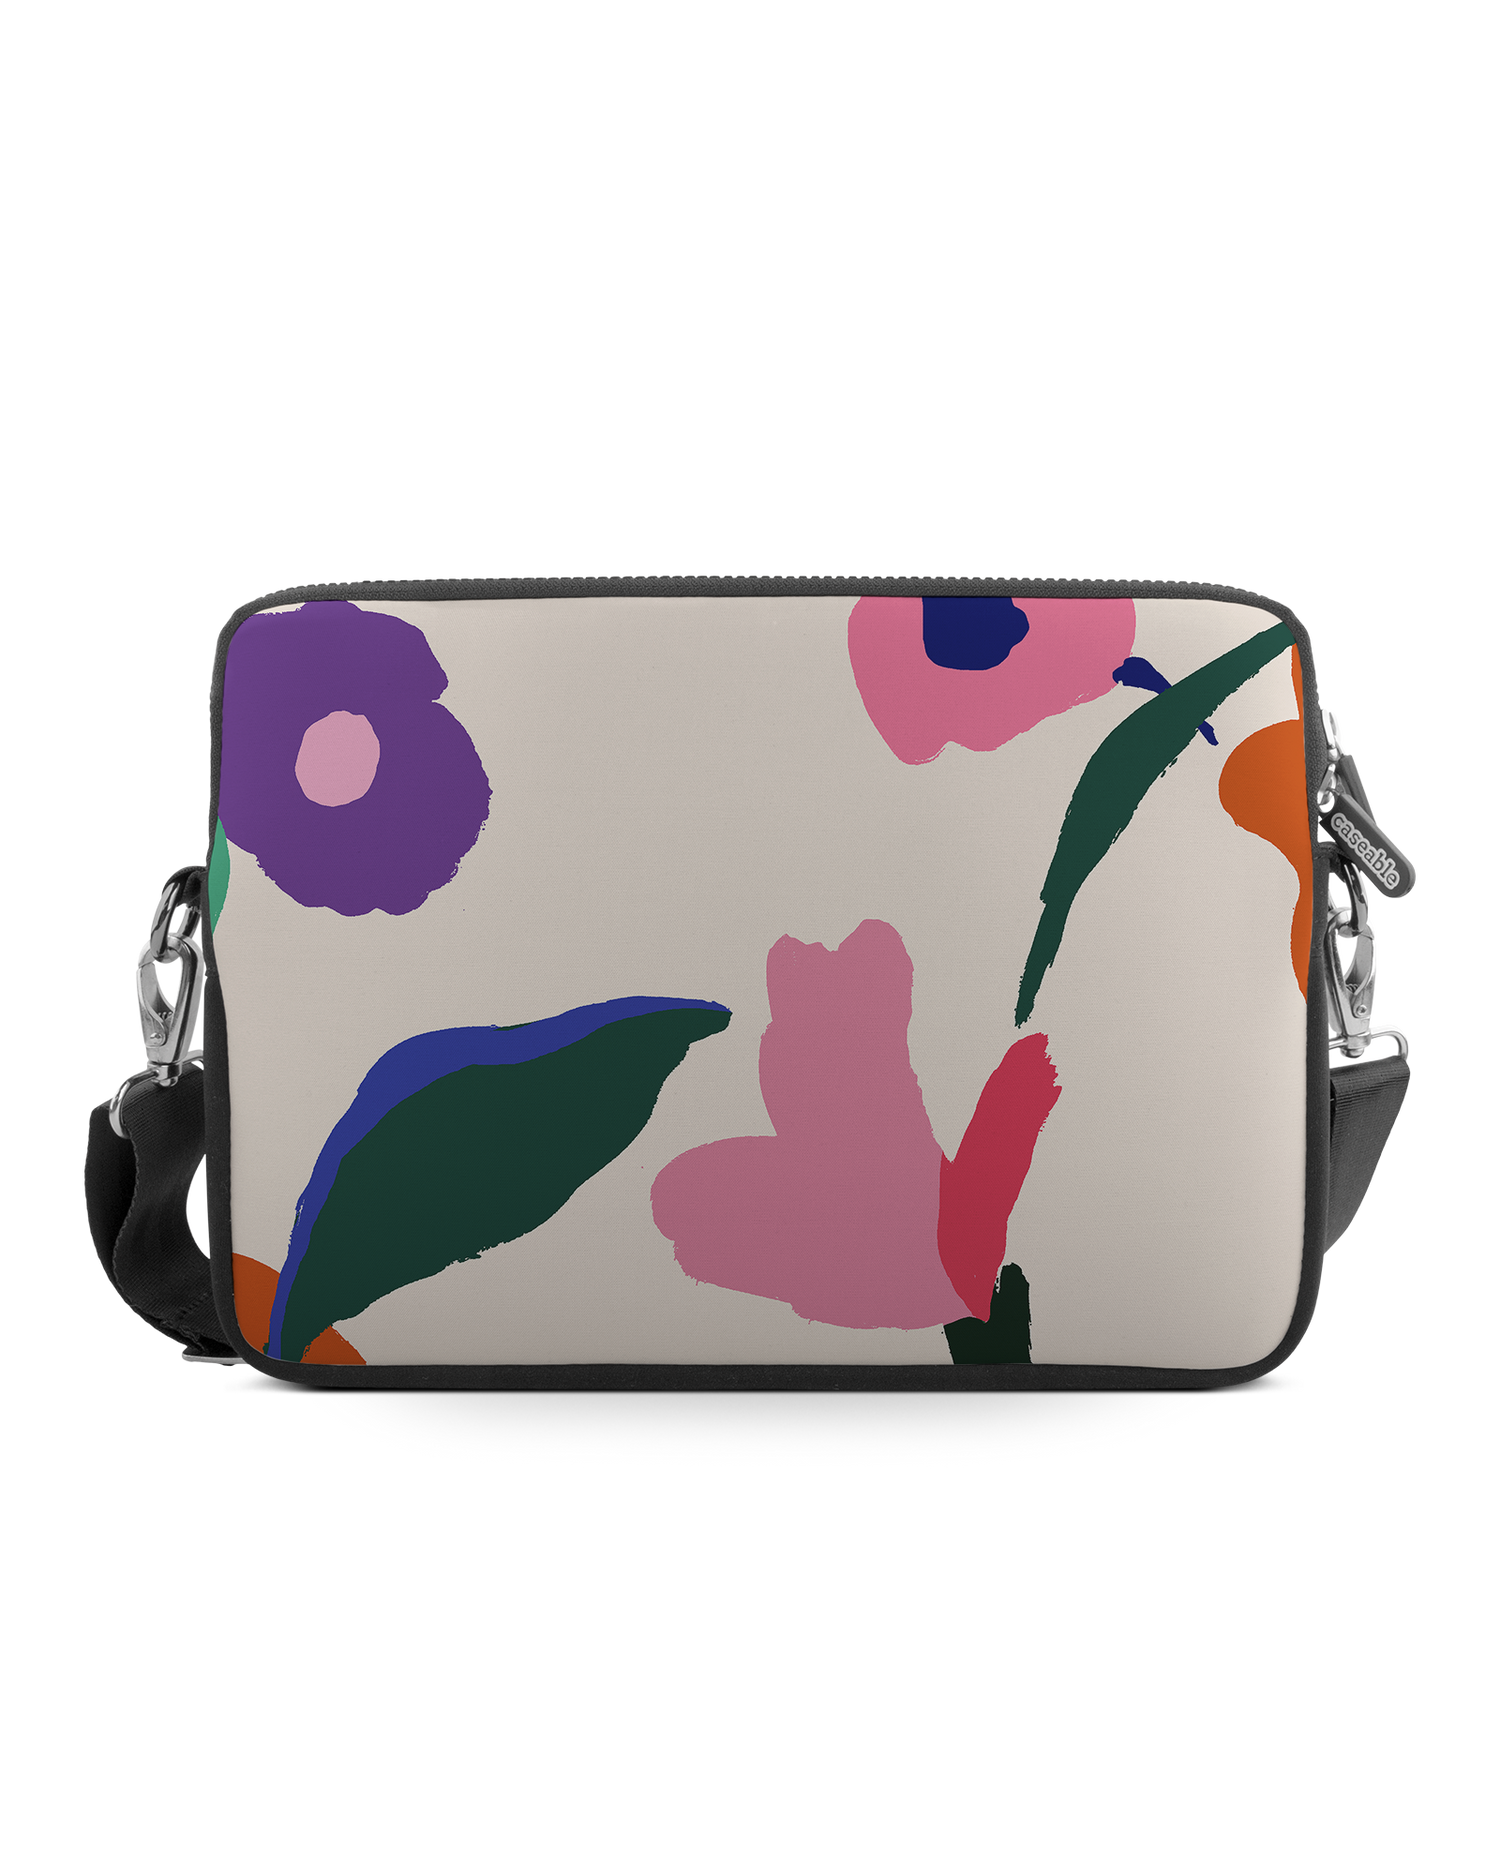 Handpainted Blooms Premium Laptop Bag 13 inch: Front View